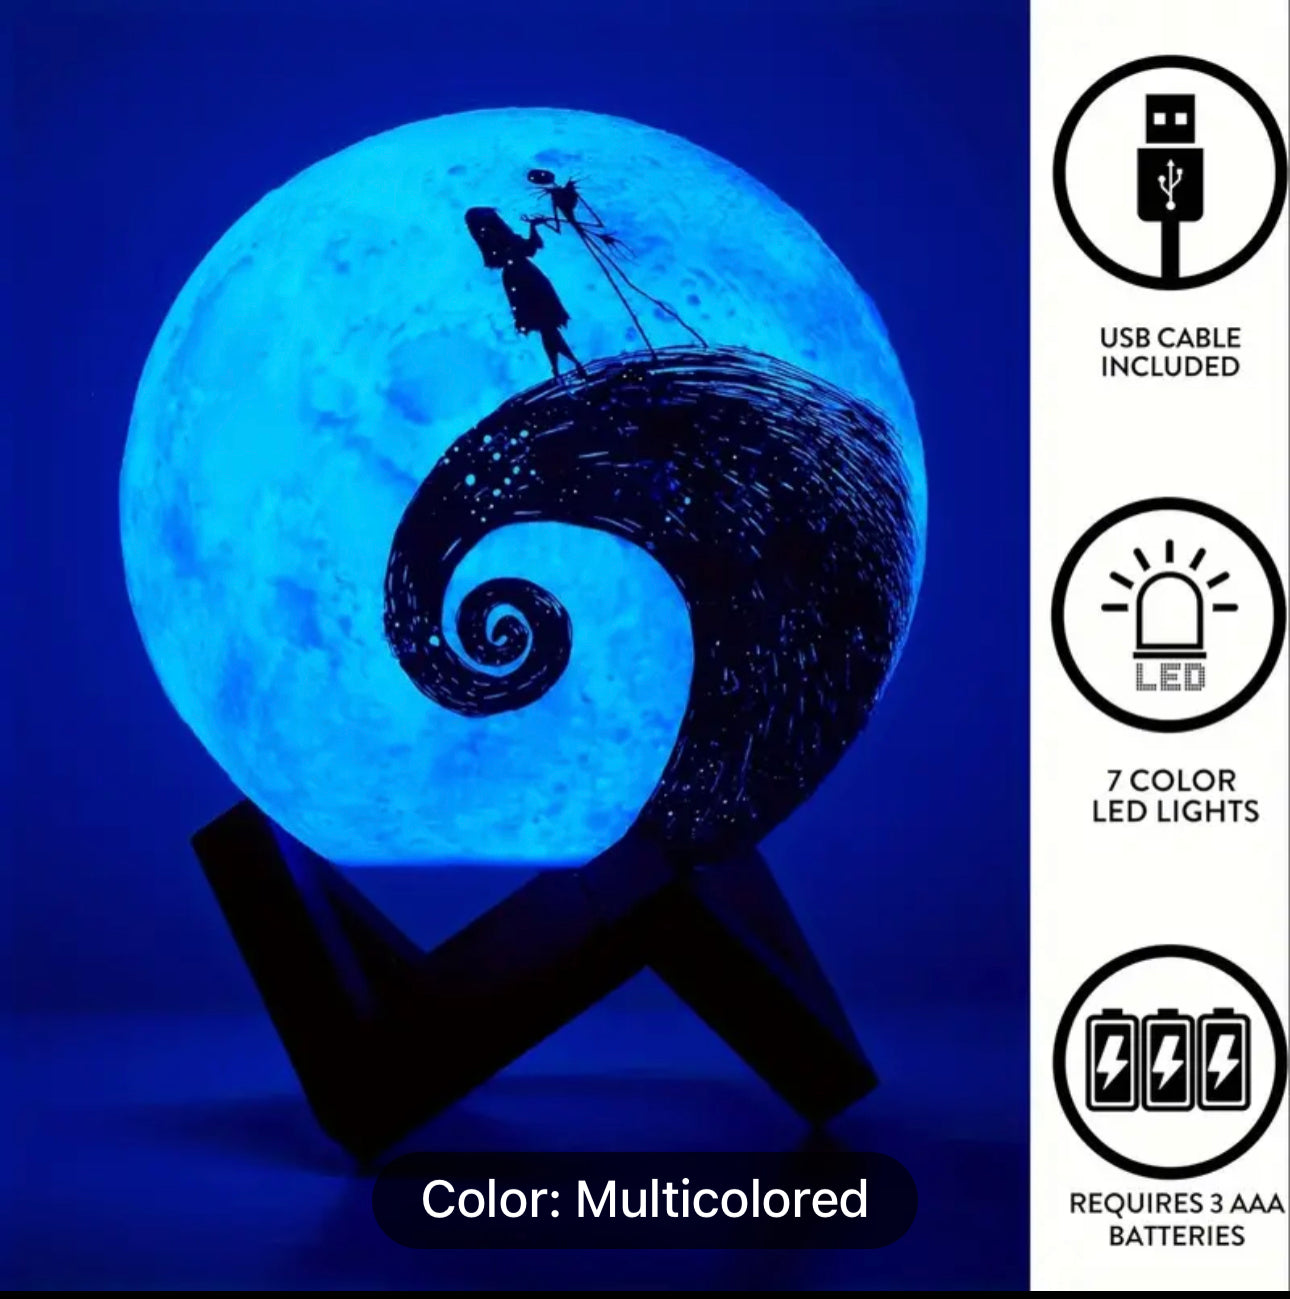 Nightmare Before Christmas, Spherical Christmas Nightmare Light, LED Color-changing Mood Light